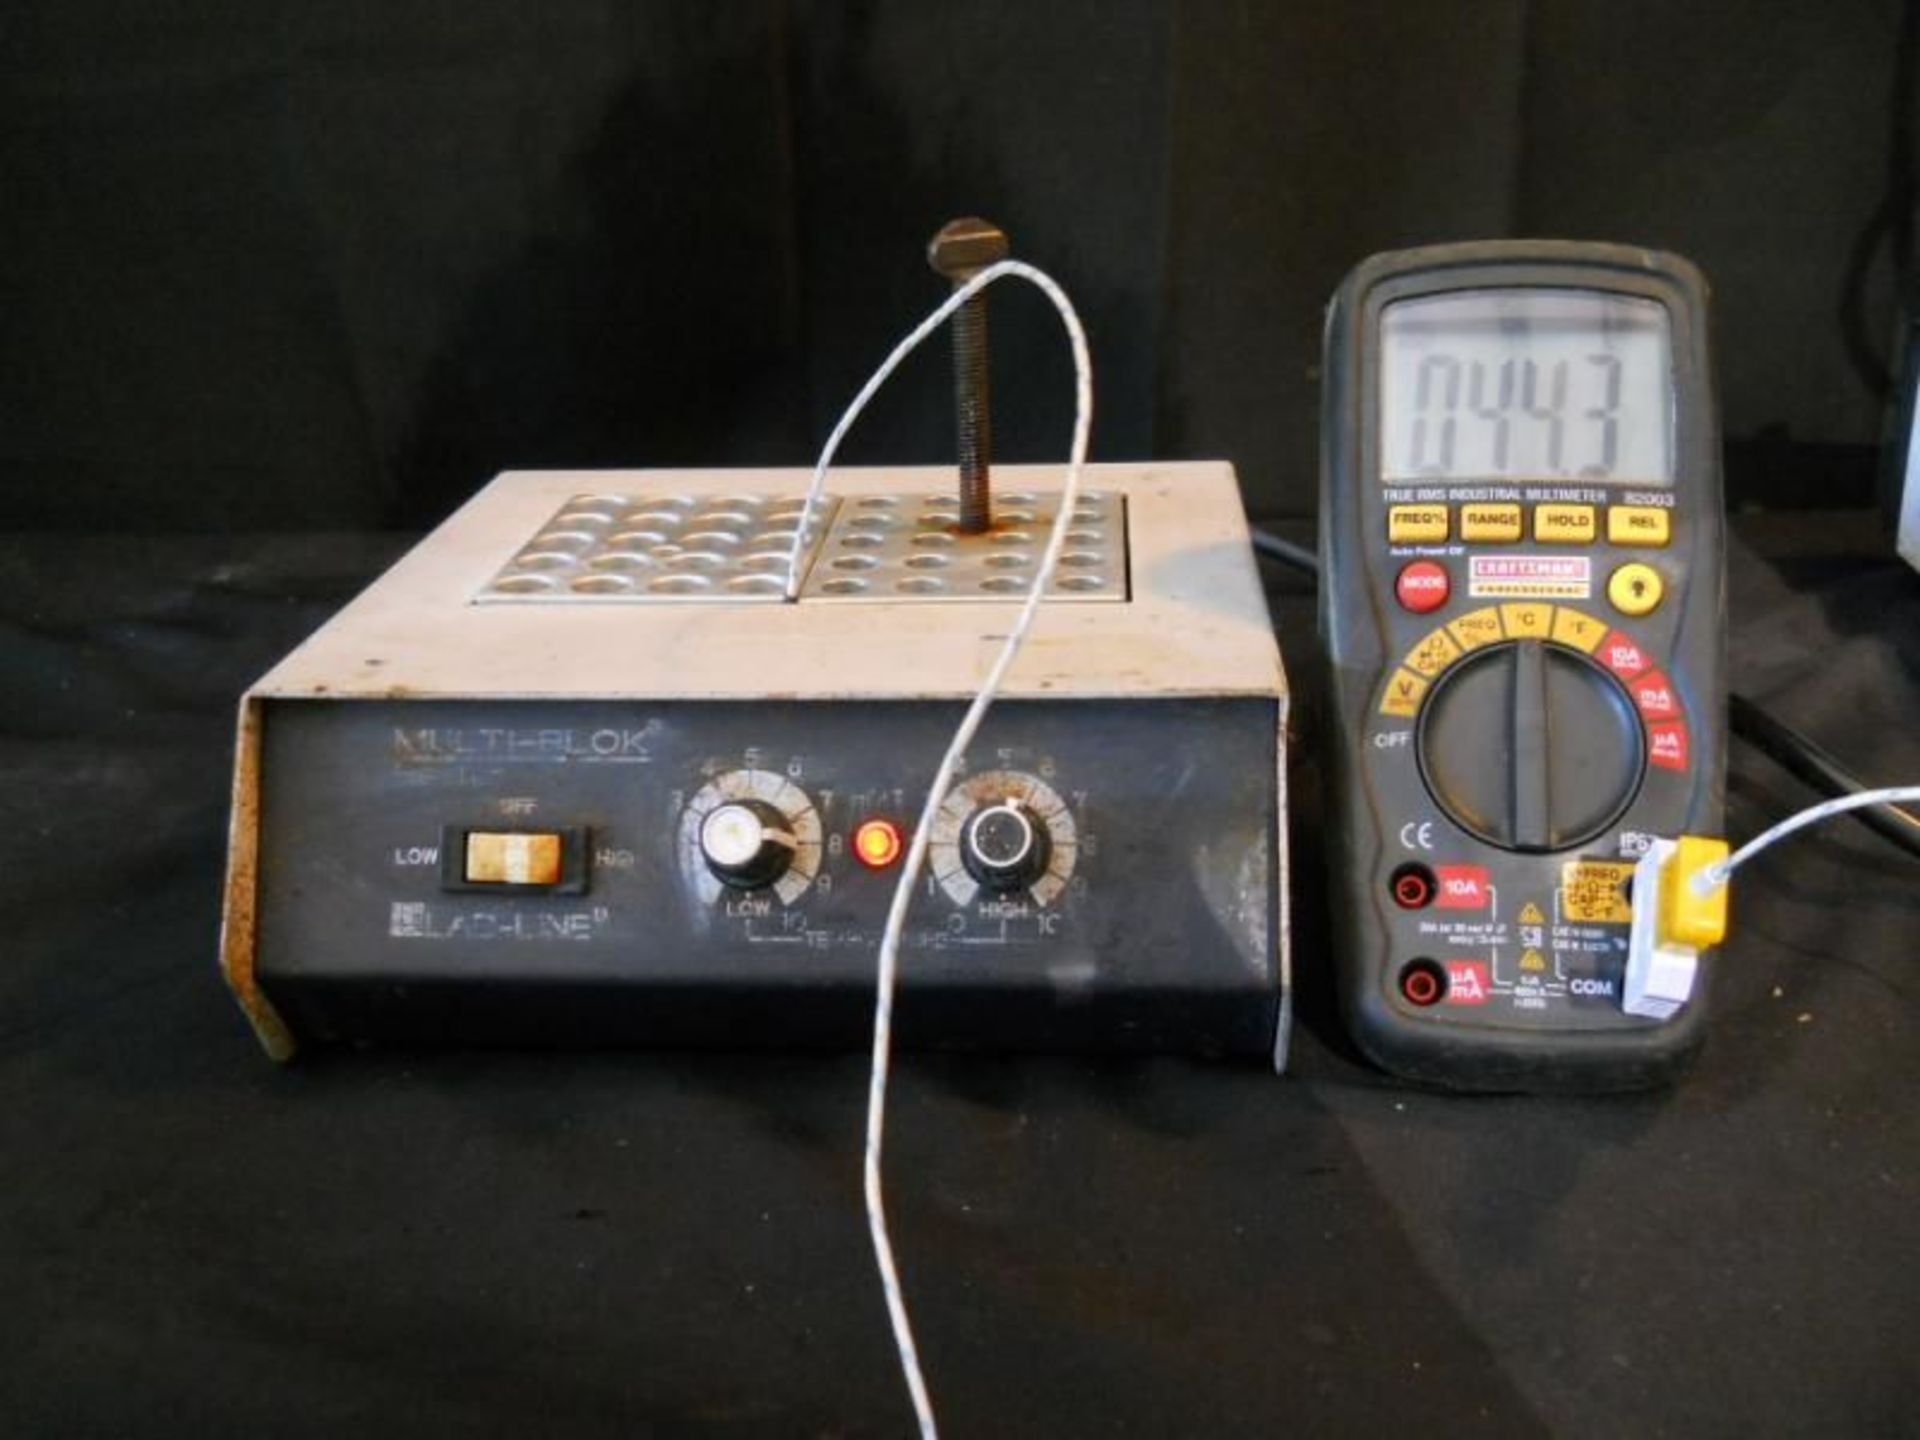 Lab-Line Instruments Multi-Blok (Block) Heater Model 2052, Qty 1, 330960122843